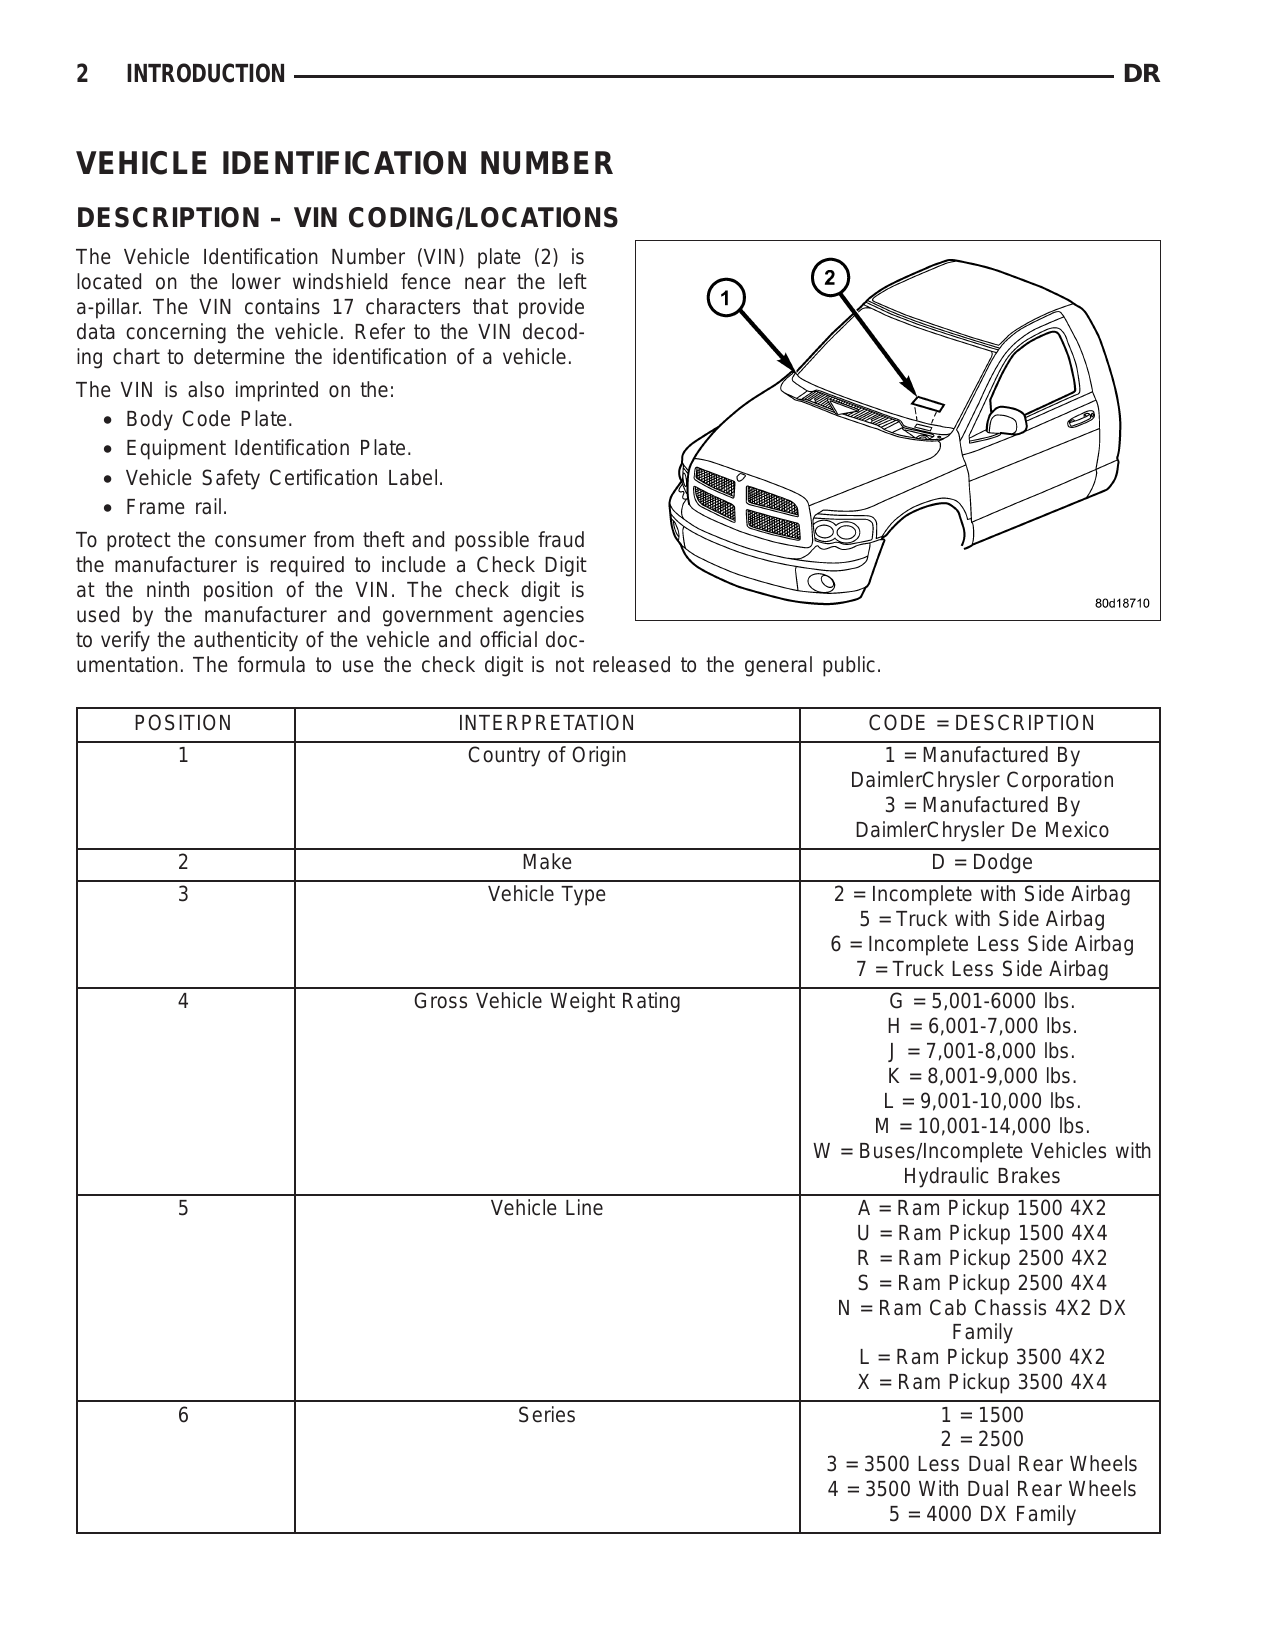 2006 Dodge RAM pickup truck manual Preview image 3